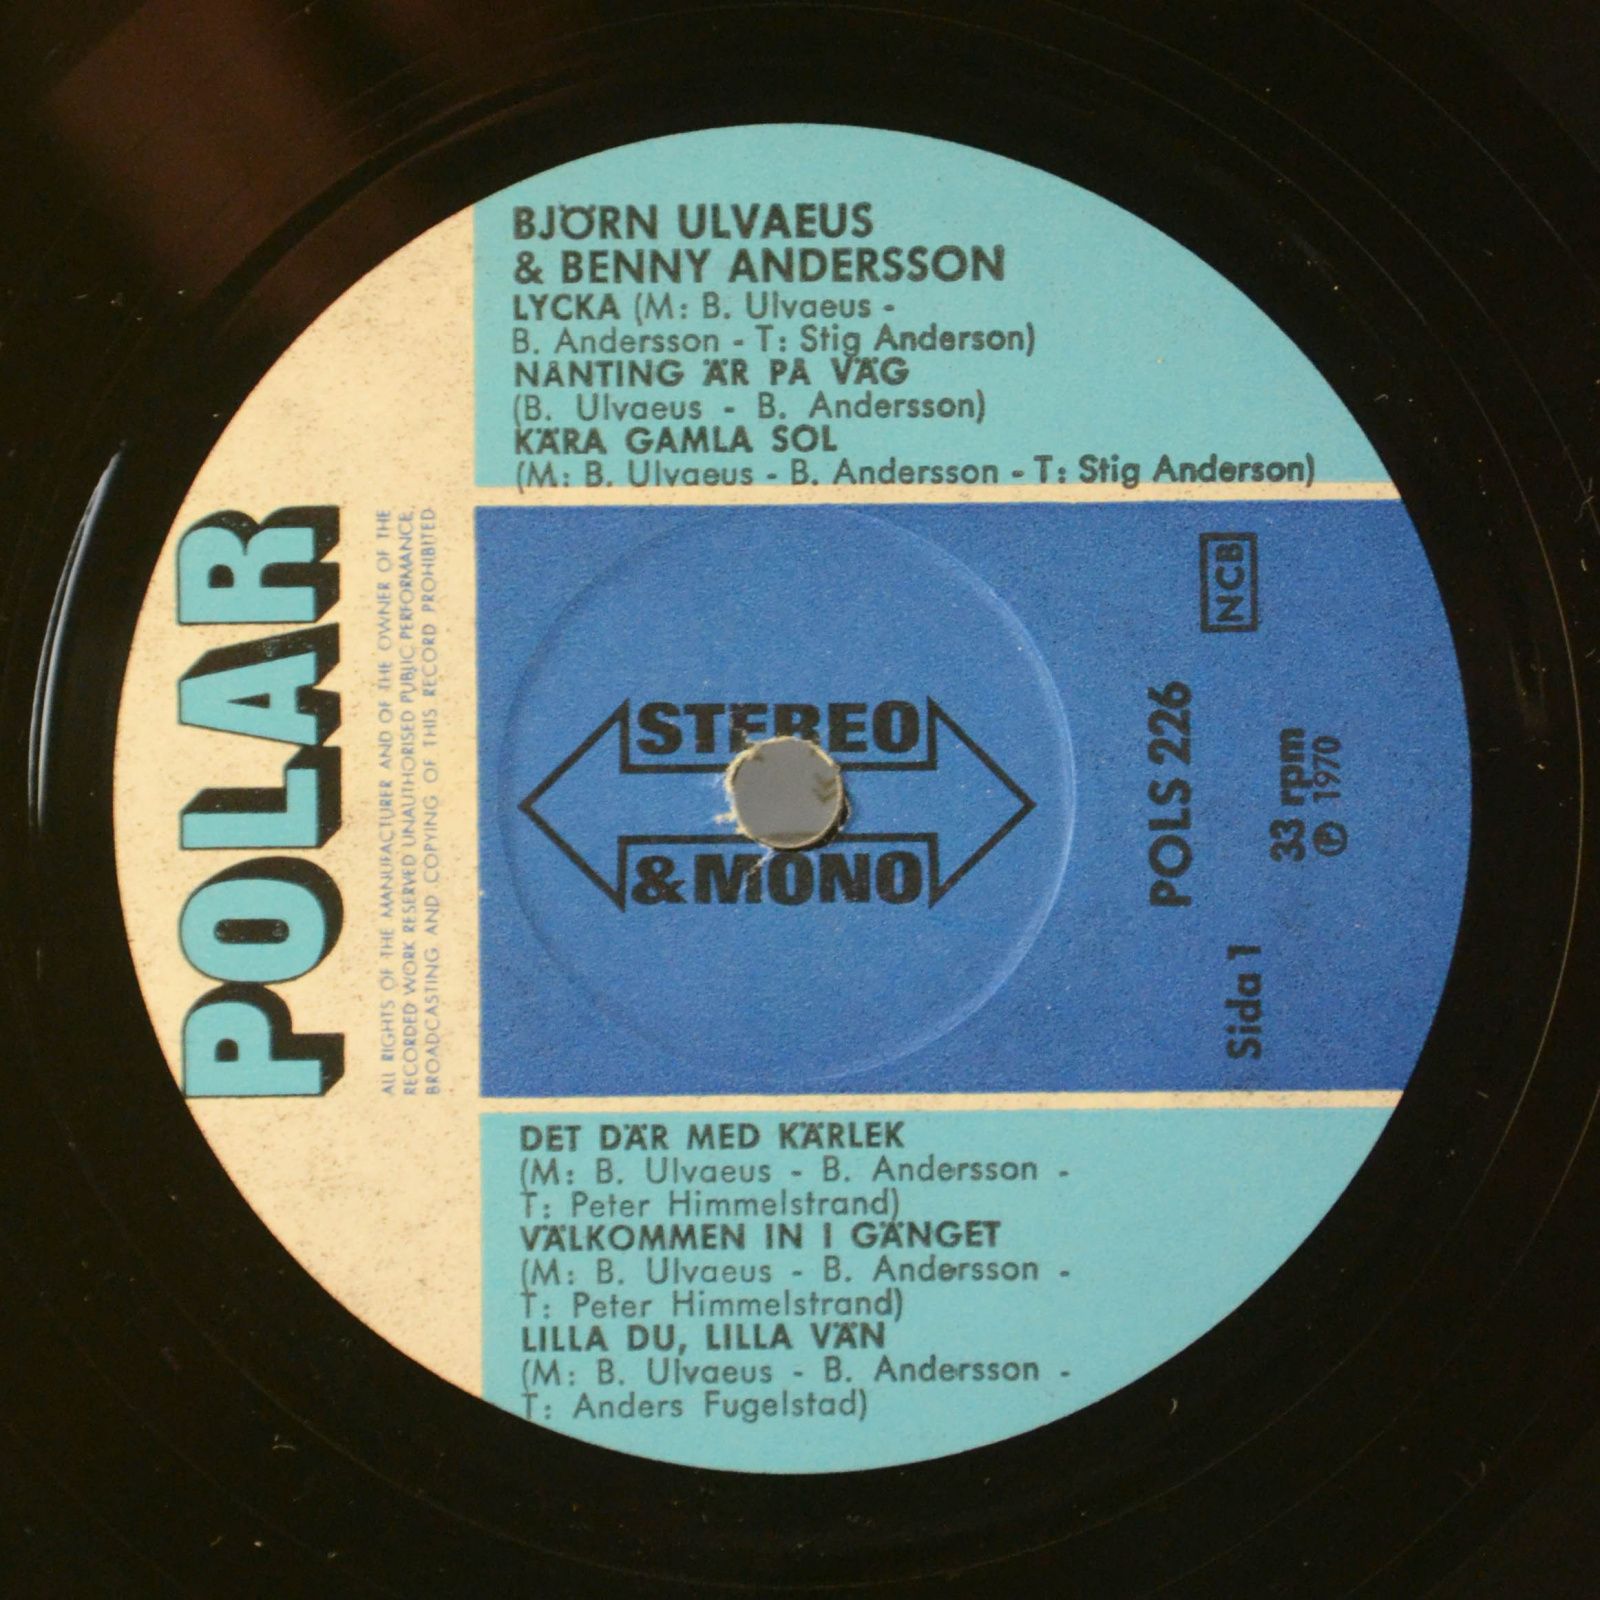 Björn Ulvaeus & Benny Andersson — "Lycka" (1-st, Sweden), 1970